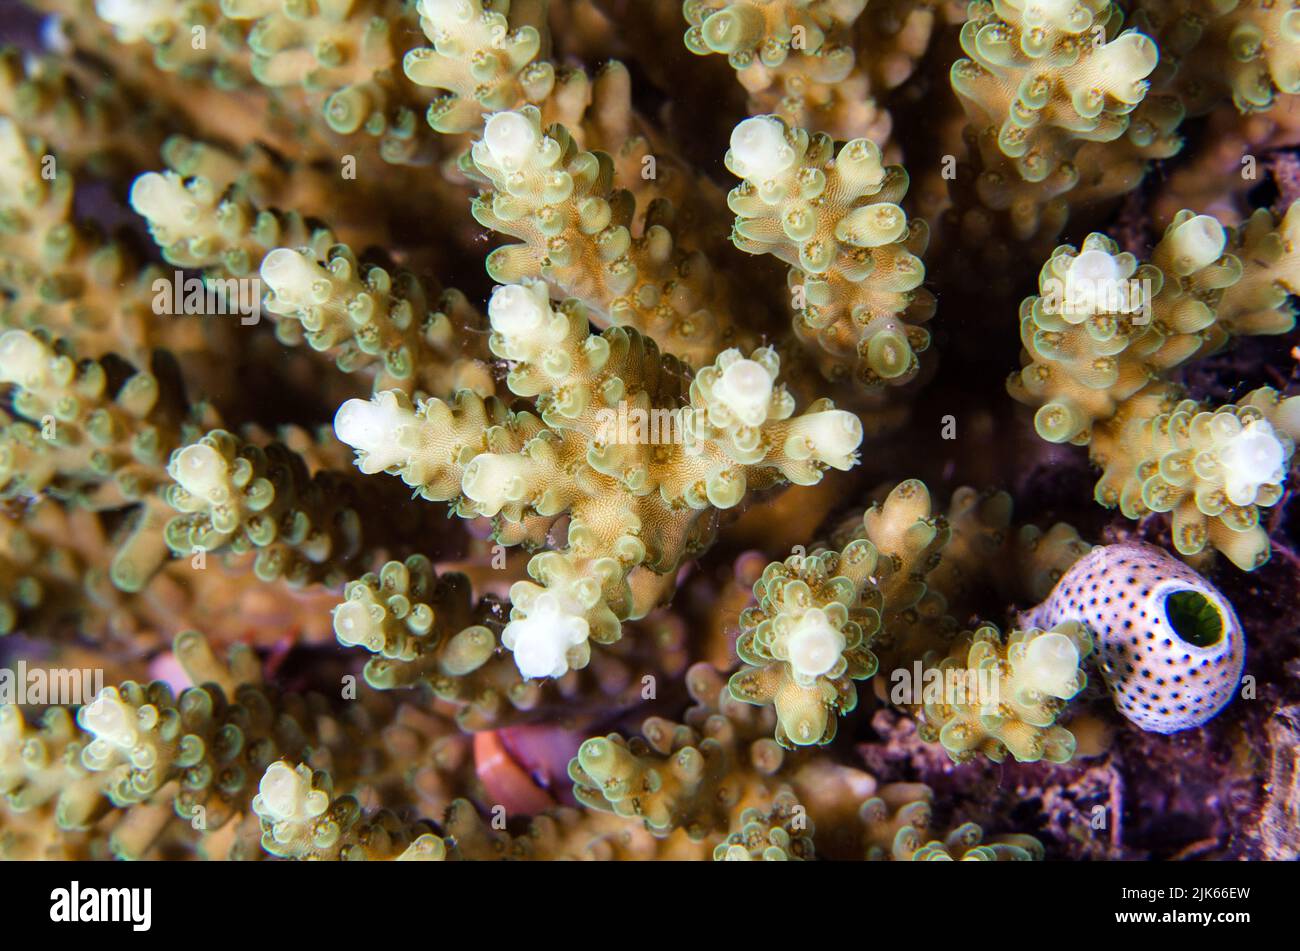 Stony coral, Acropora sp., Acroporidae, Anilao, Batangas, Philippines, Indo-pacific Ocean, Asia Stock Photo